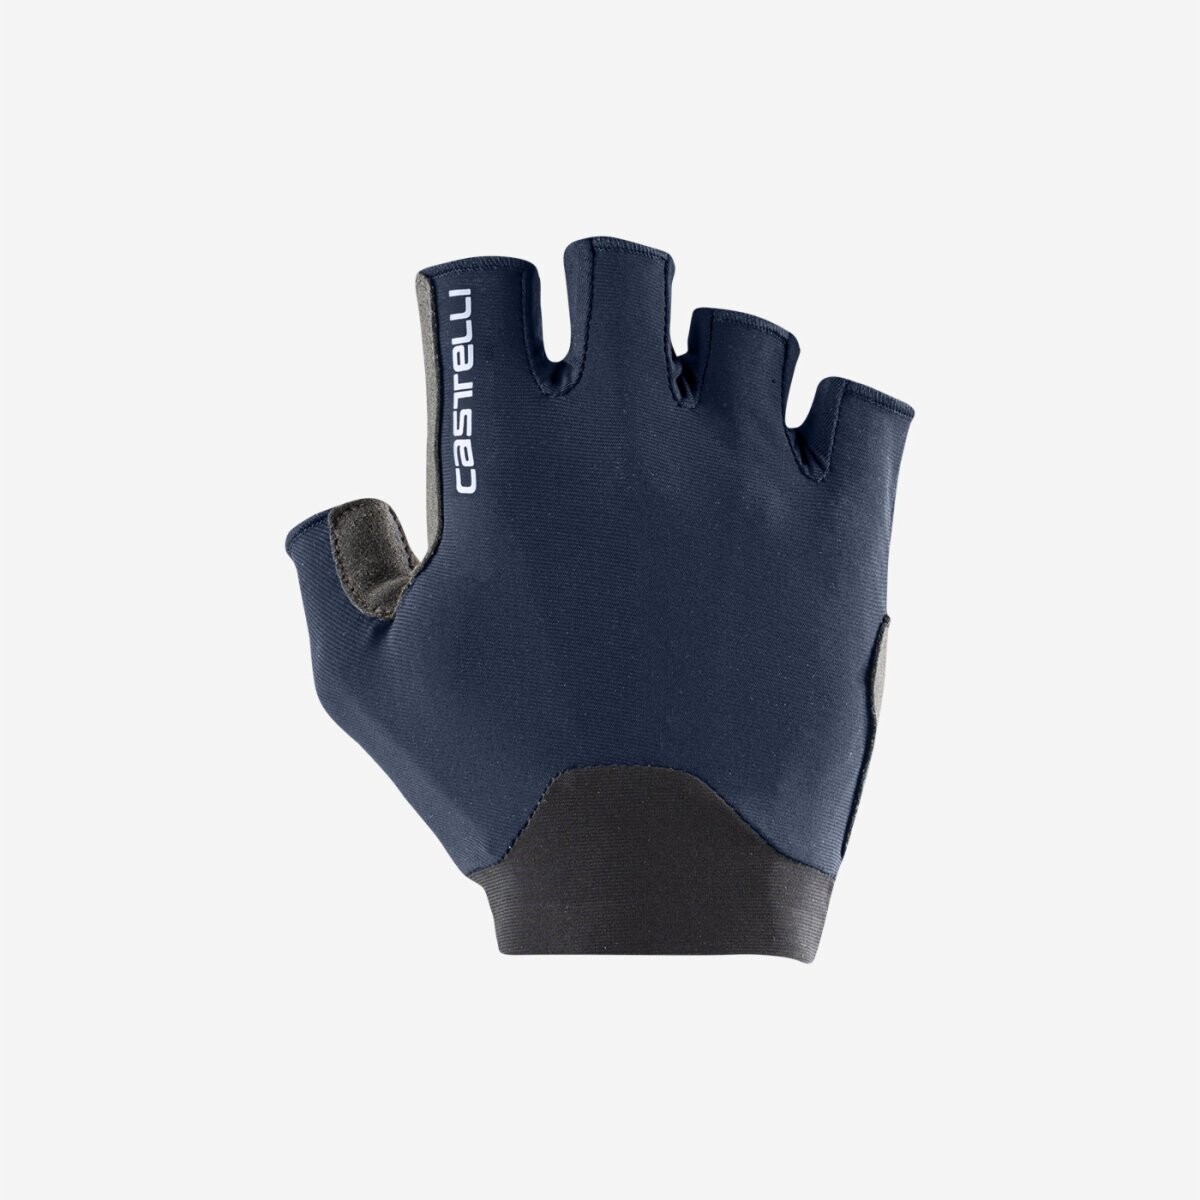 Castelli Endurance Glove - Savile Blue